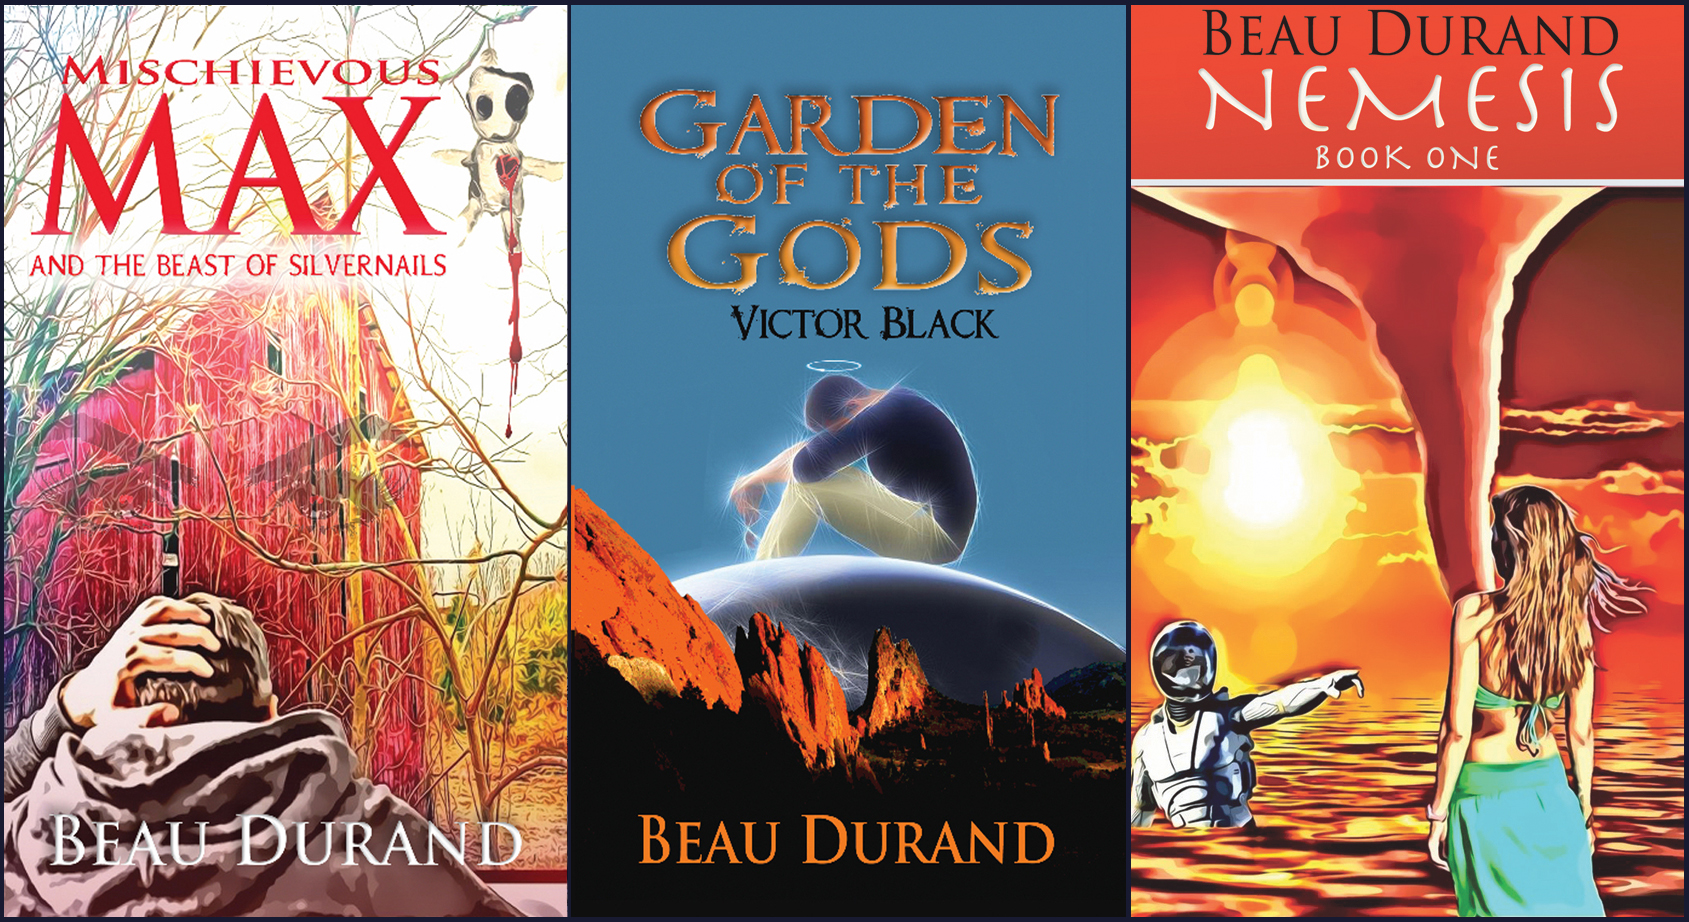 Novels by Beau Durand